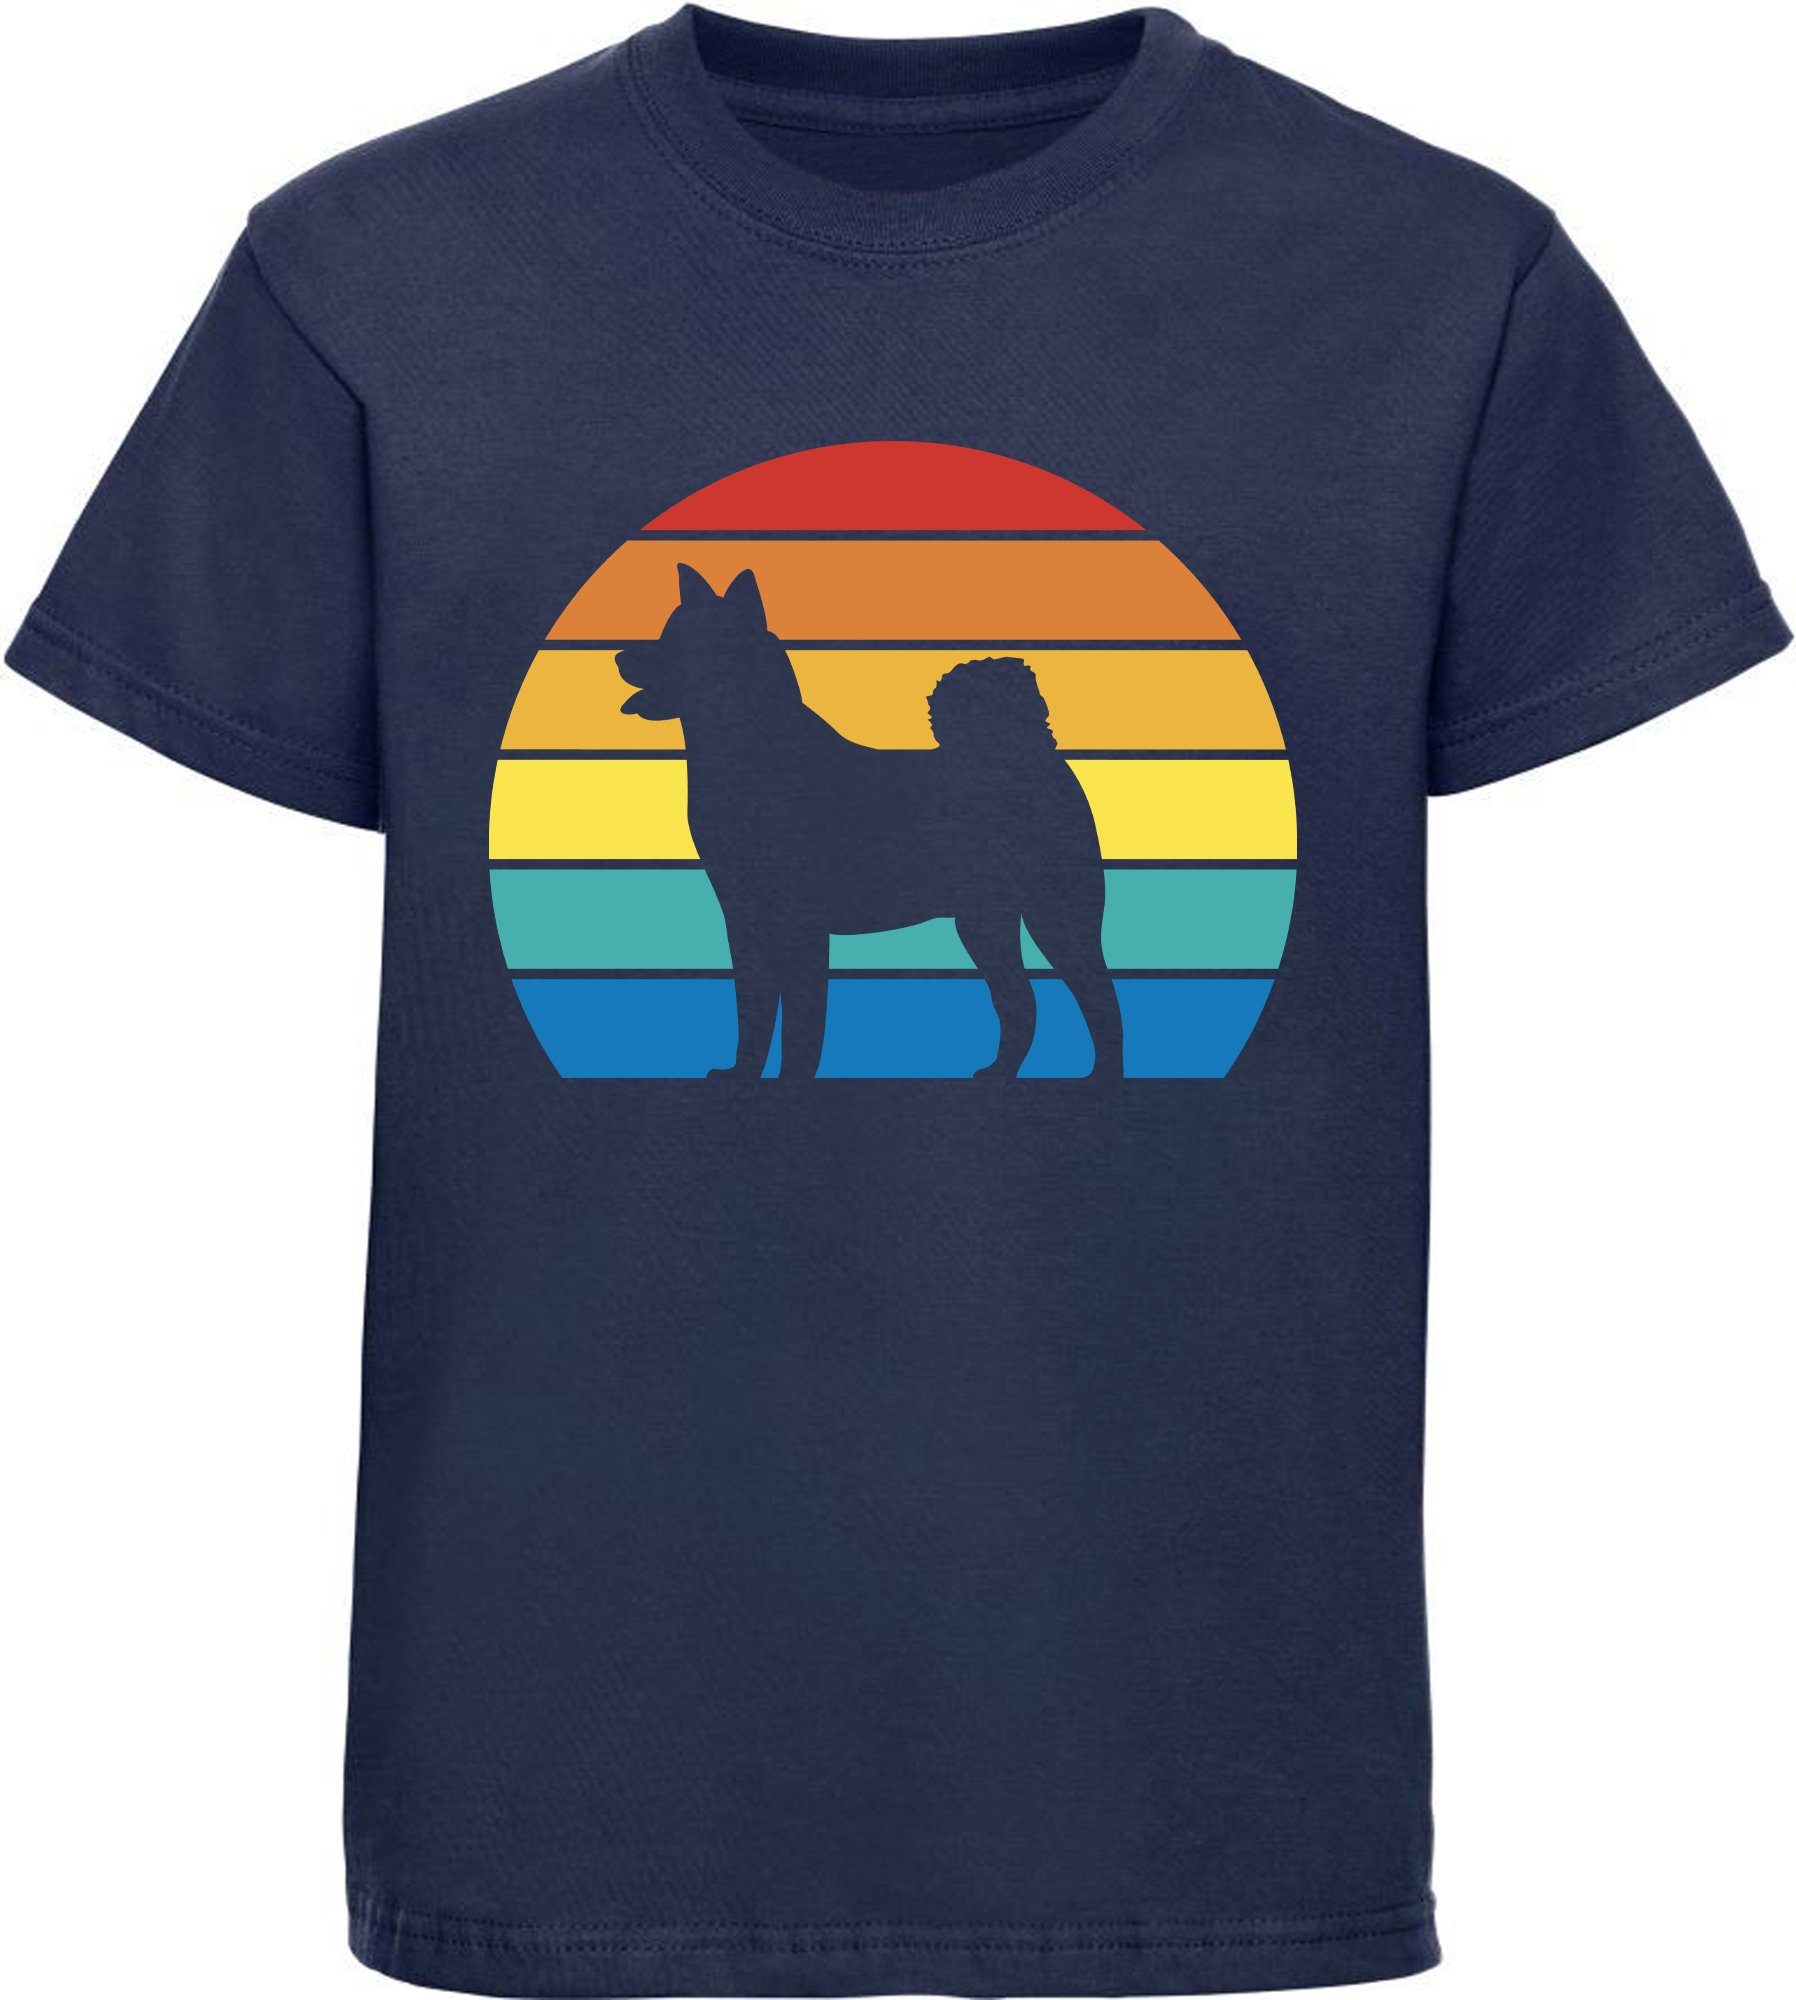 MyDesign24 Print-Shirt Kinder Hunde Baumwollshirt Aufdruck, T-Shirt i236 mit Bild bedruckt - Akita navy Retro blau